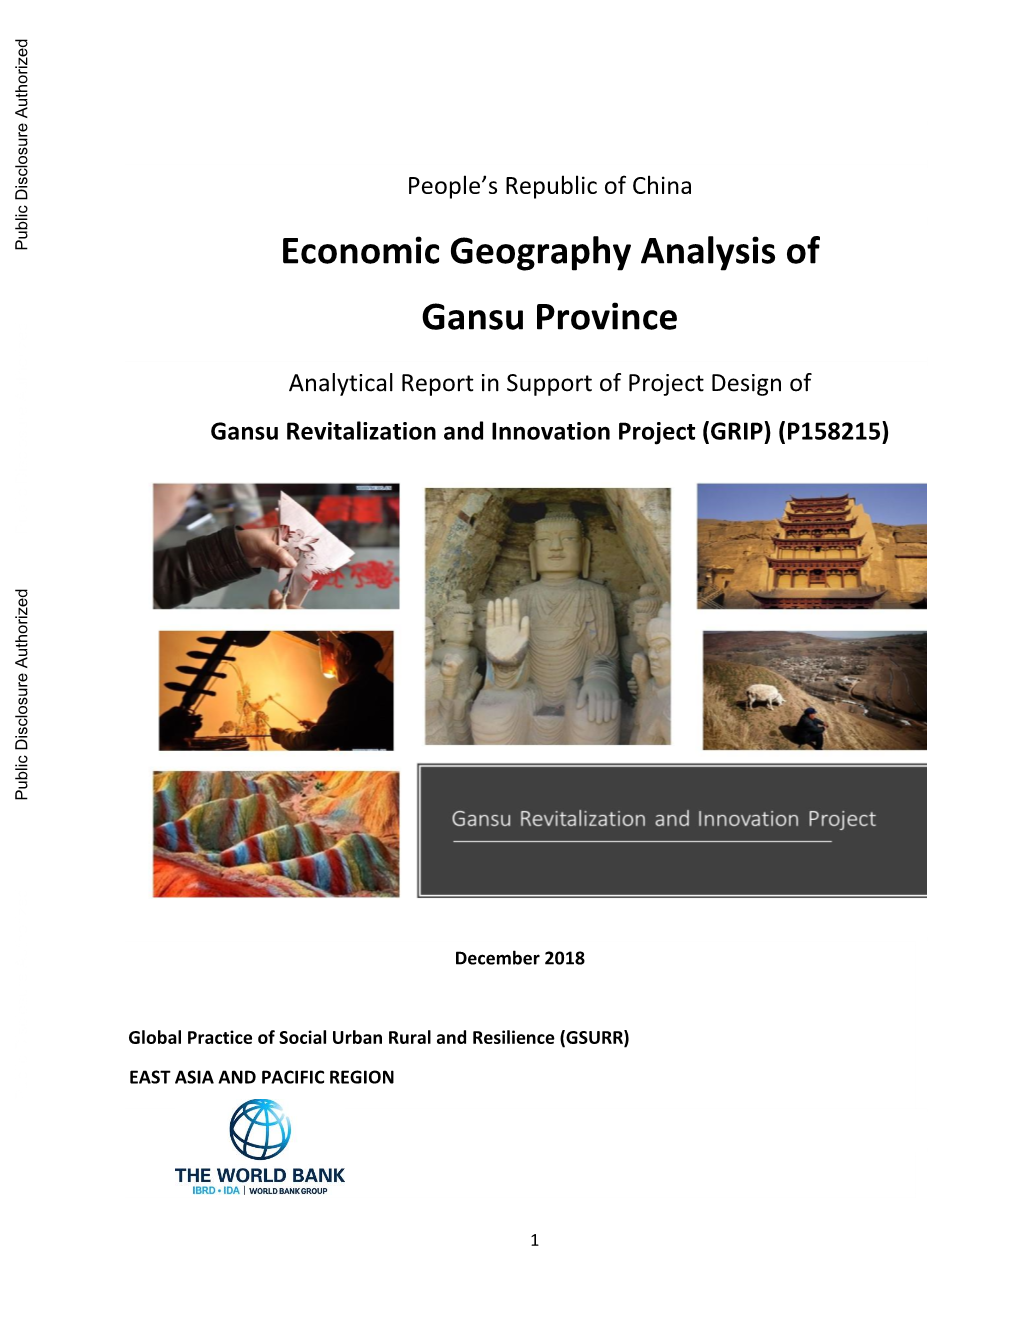 Economic Geography Analysis of Gansu Province